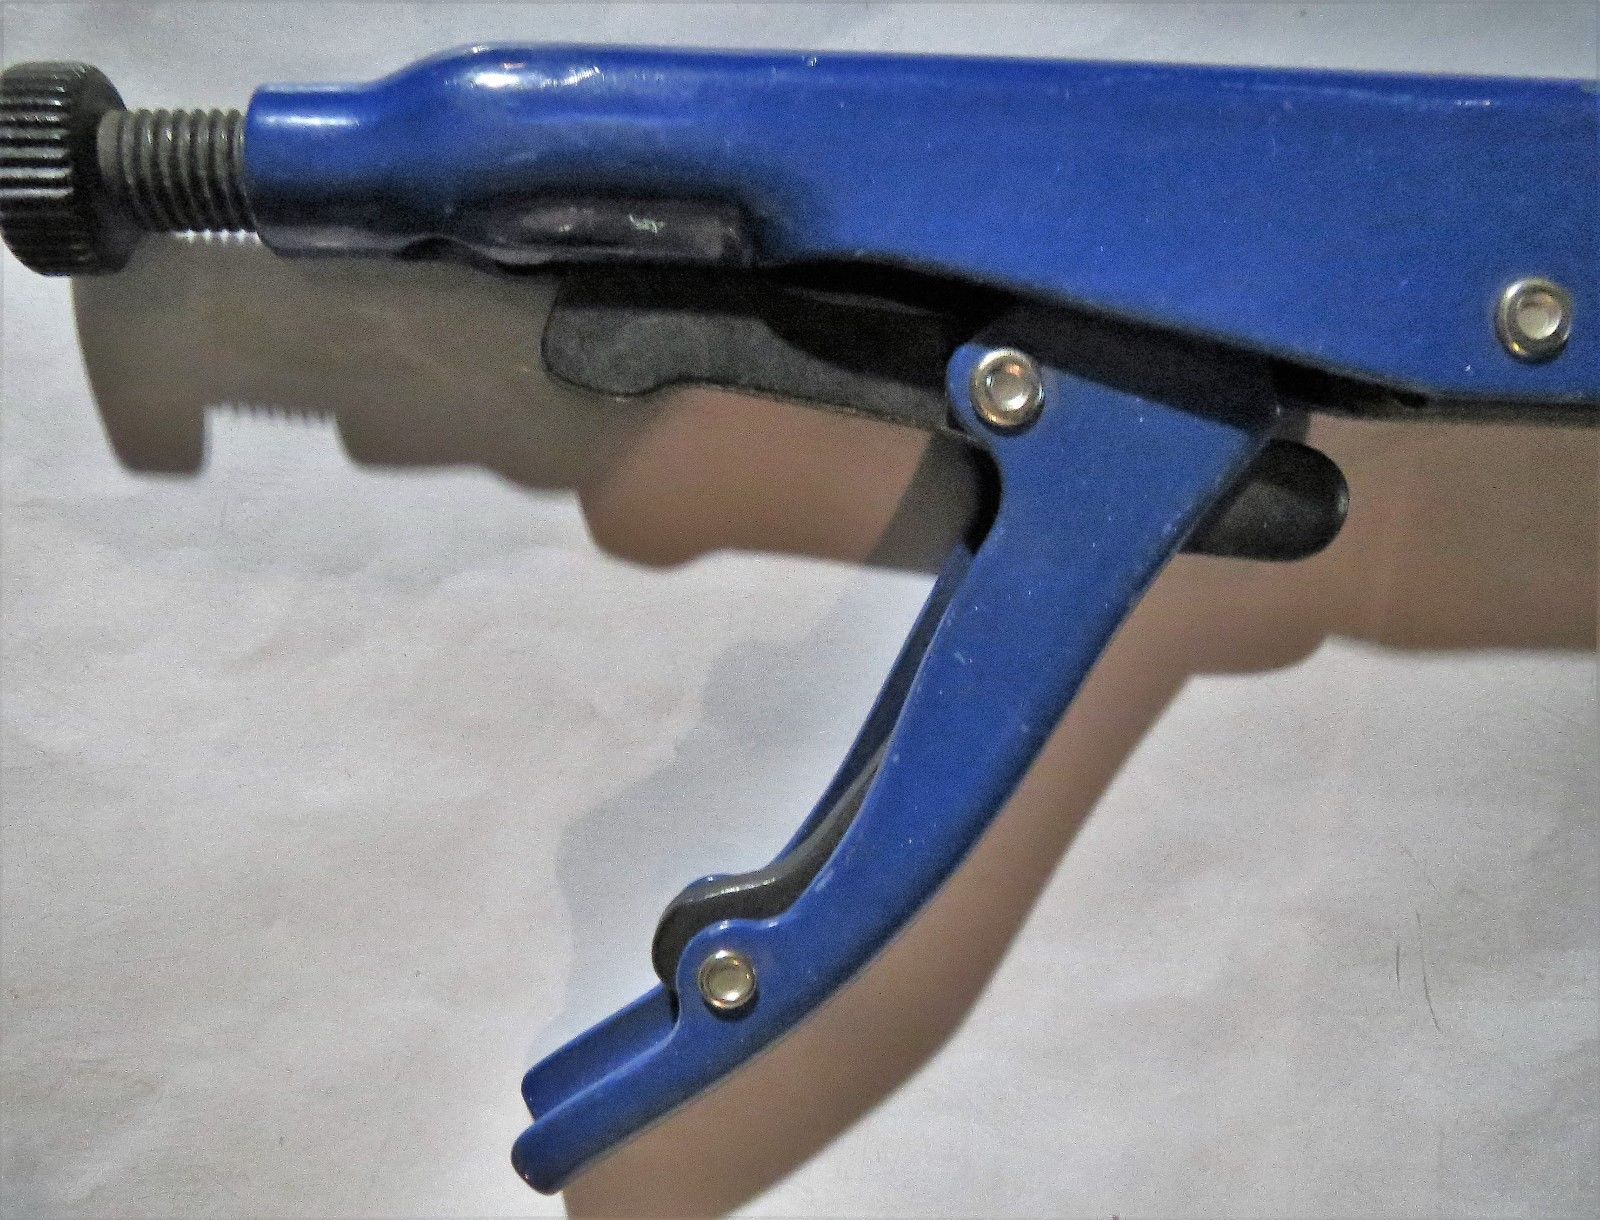 Napa P810 Axial Grip L Flat Lap Joints Plier